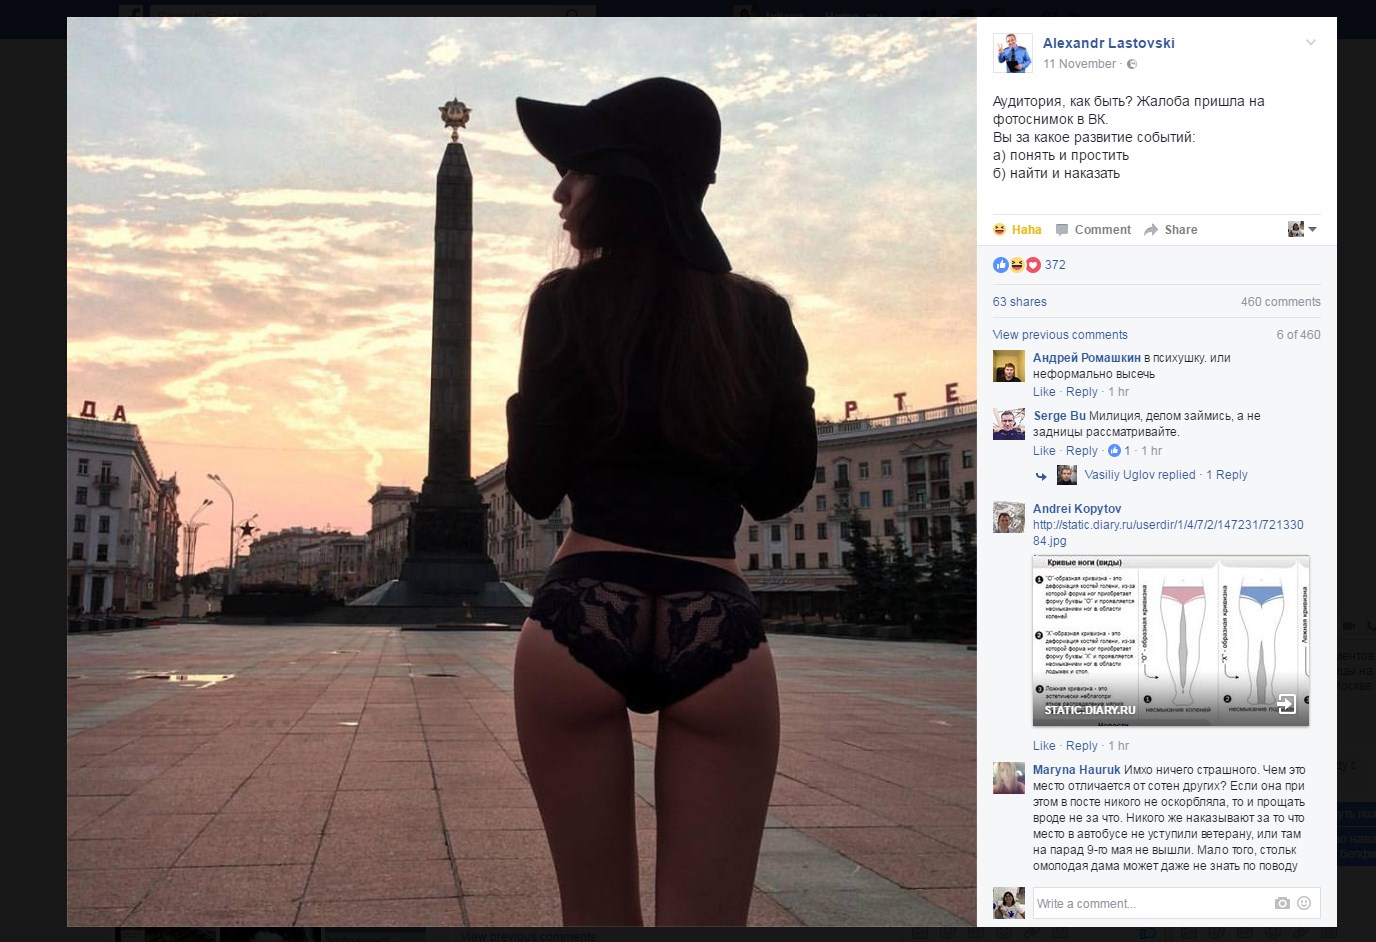 Panties Intruder! Minsk police ask public to help decide on punishment for  half-naked photo » Новости Беларуси - последние новости на сегодня - UDF